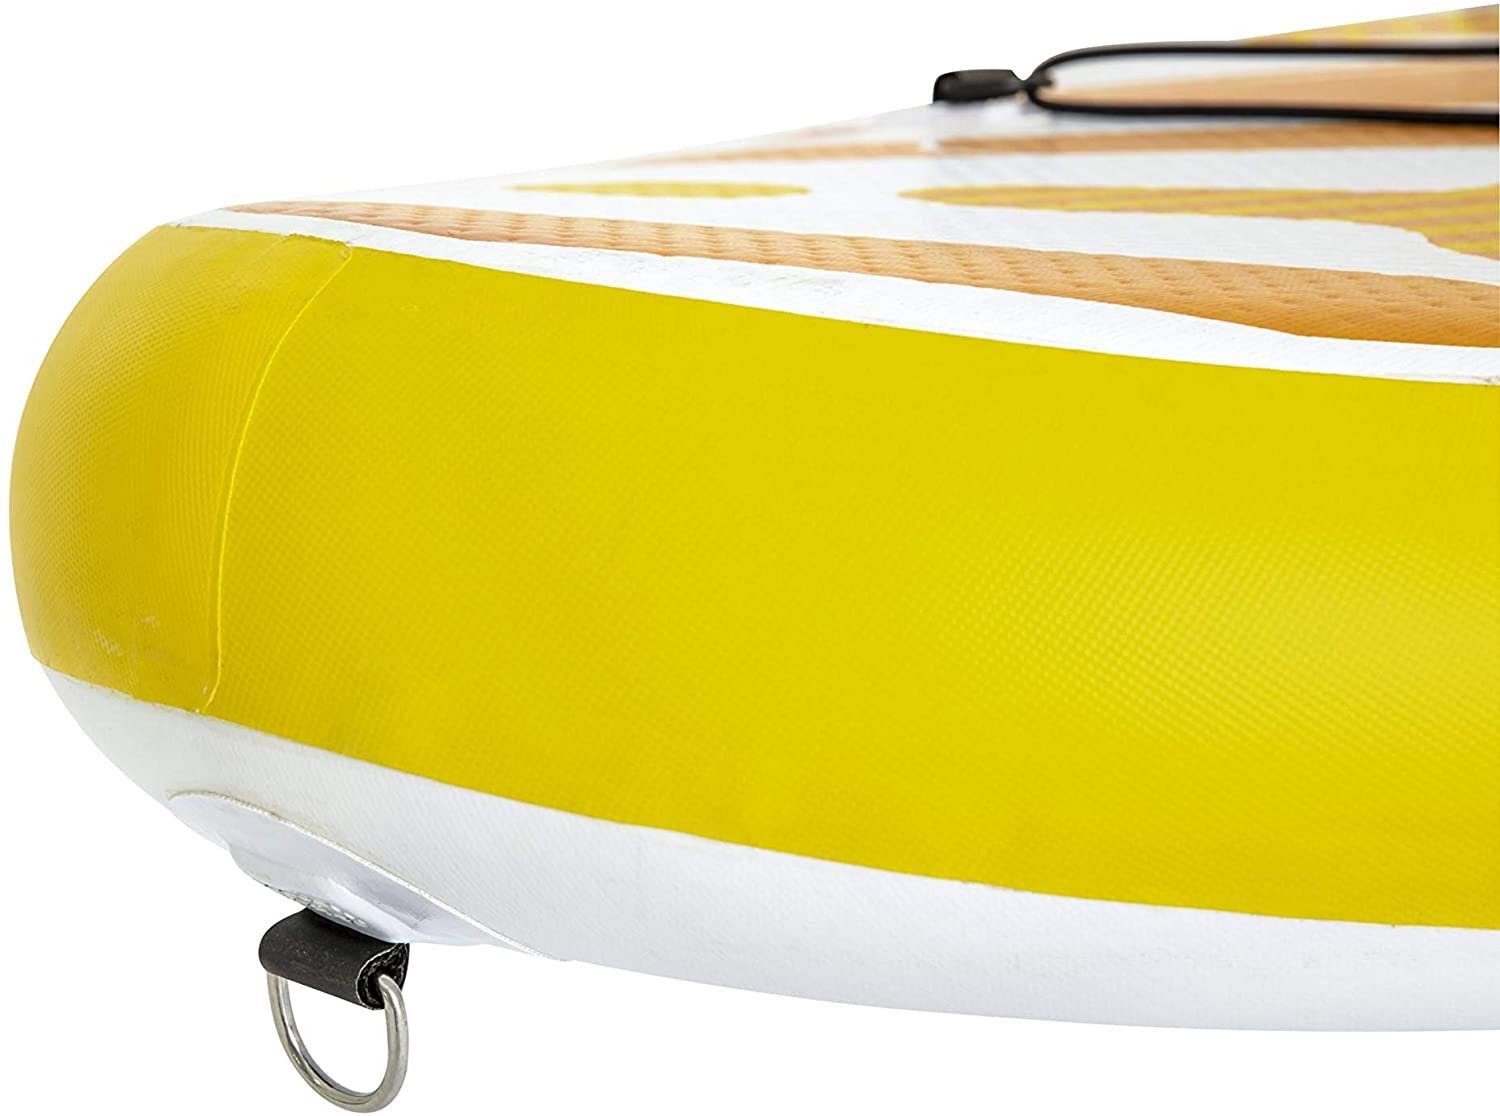 BESTWAY SUP-Board Coil-Leash, (Komplett Touring 1 Cruise", SUP Set), "Aqua Board Finne 65348 Pumpe, Hydro-Force Paddel, inklusive